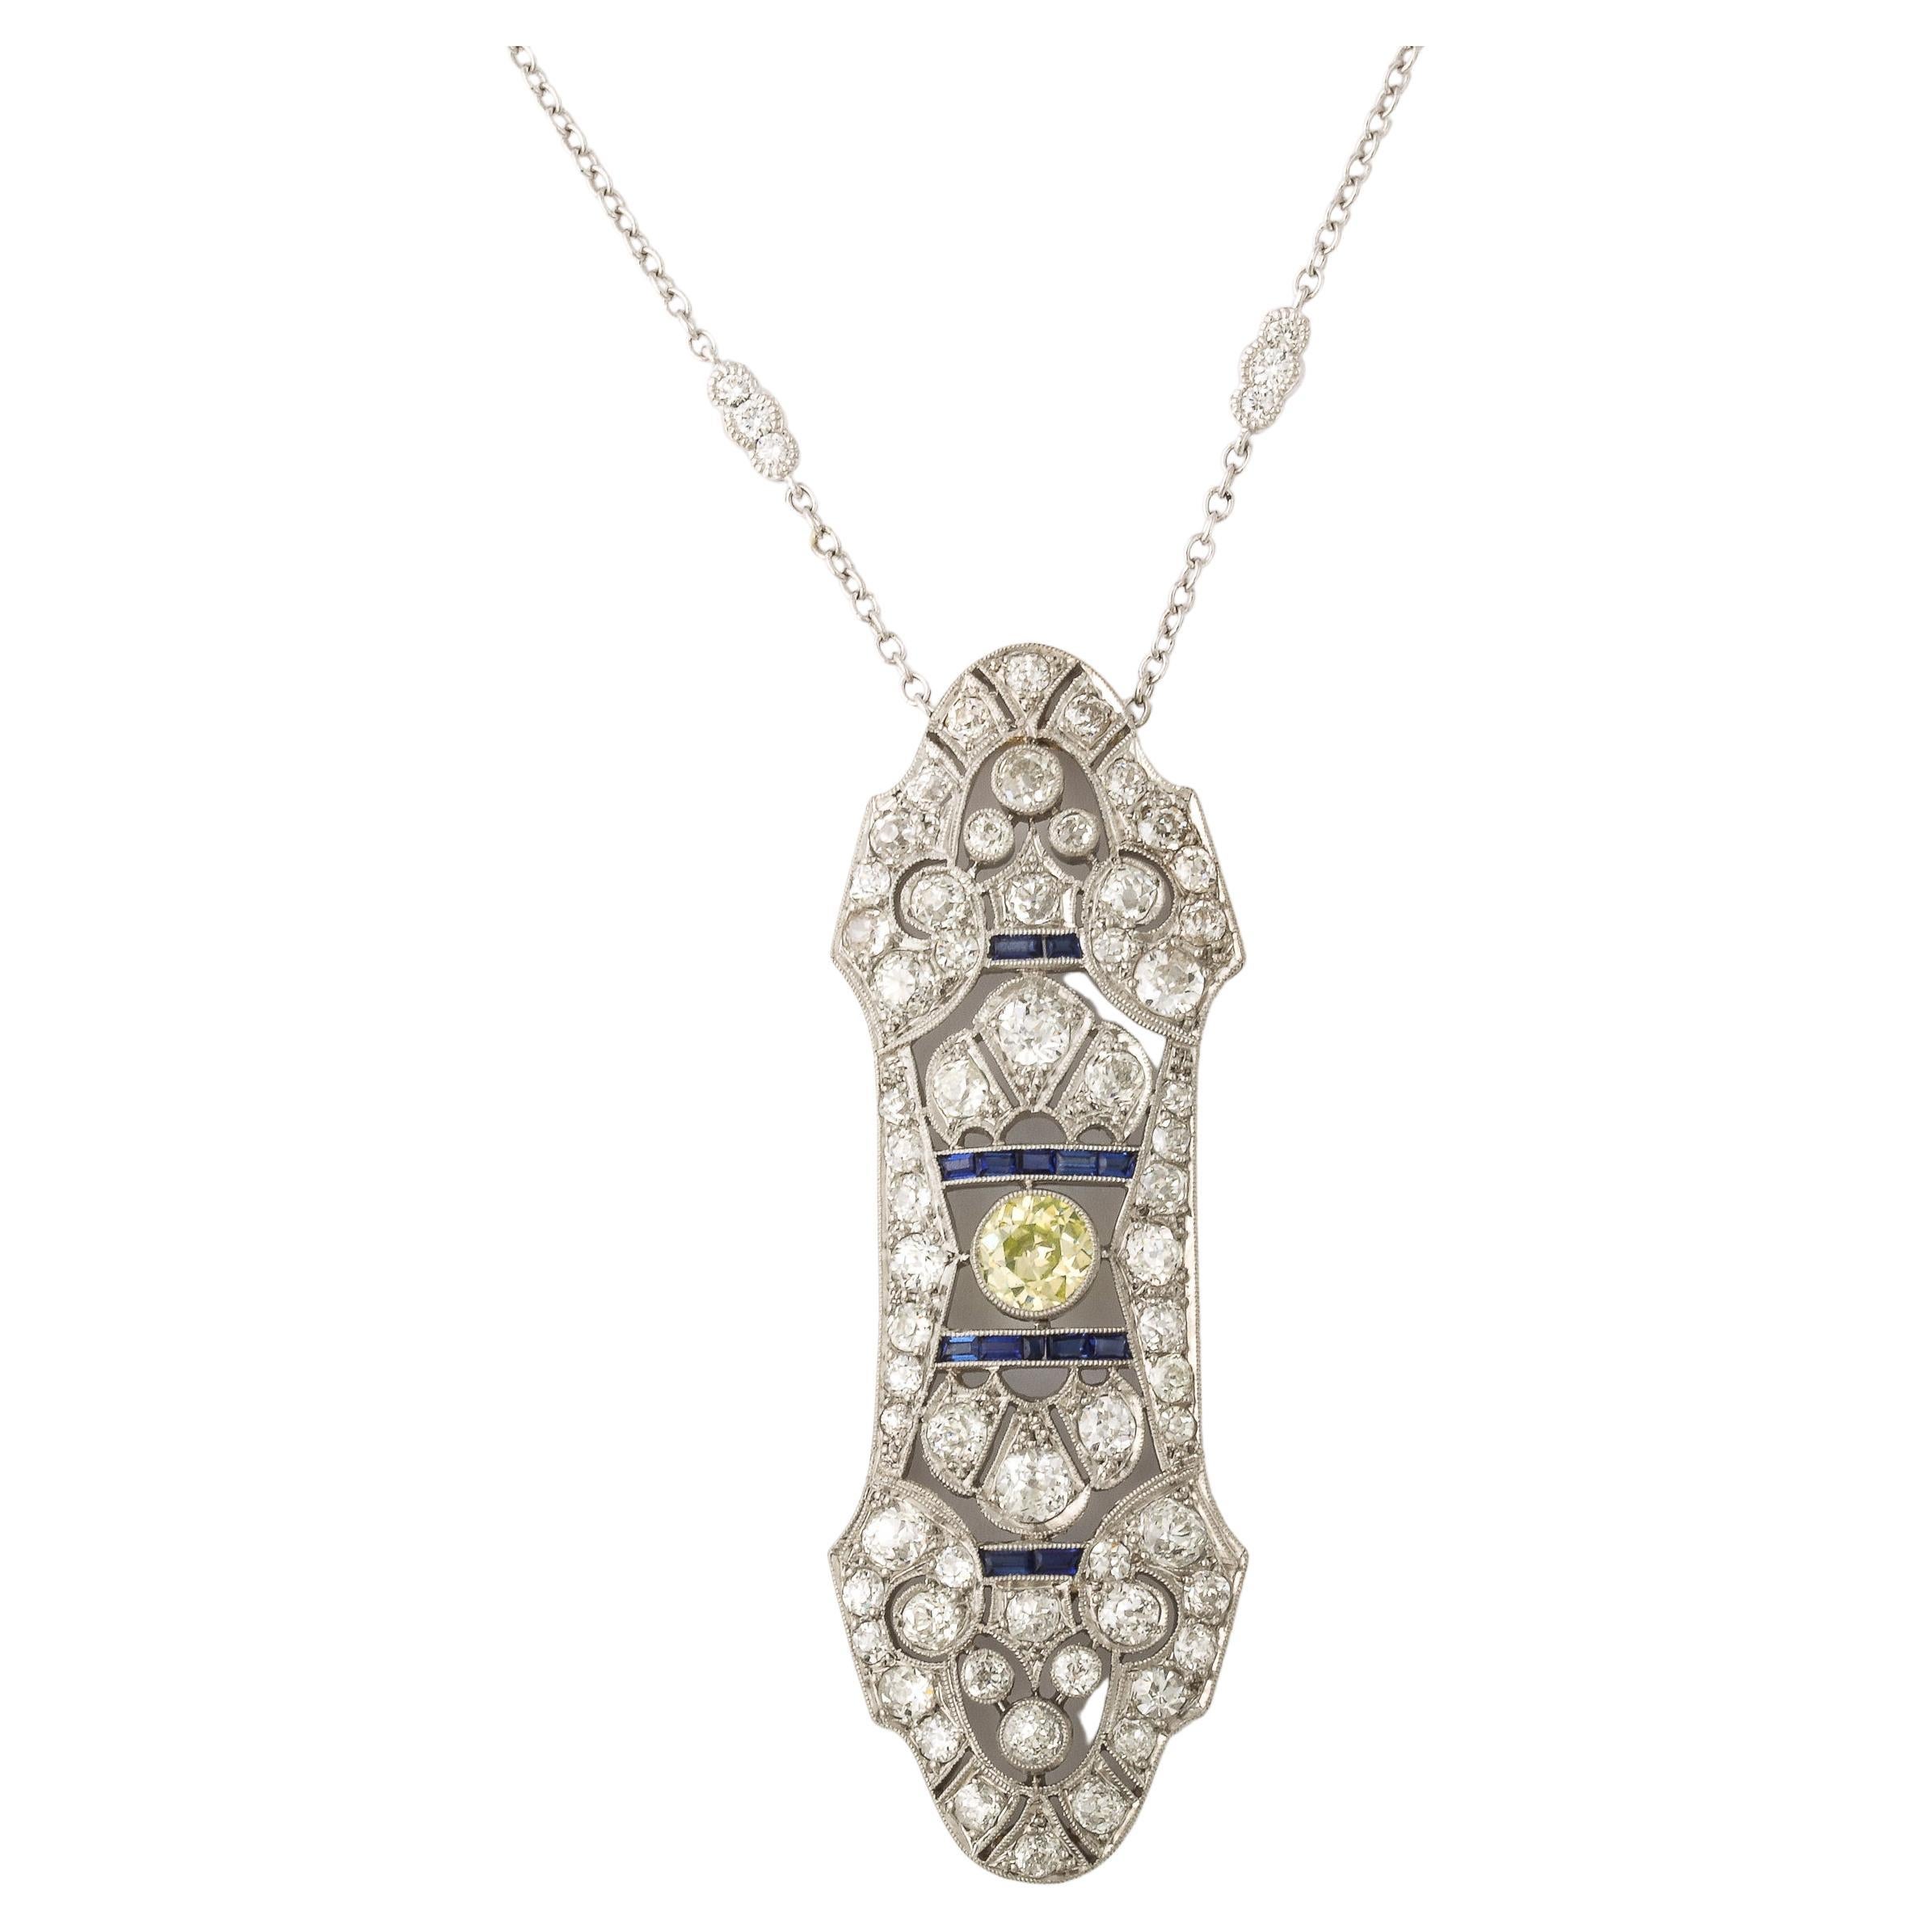 Art Deco Necklace in White Gold, Yellow Diamond, Diamonds, & Sapphires